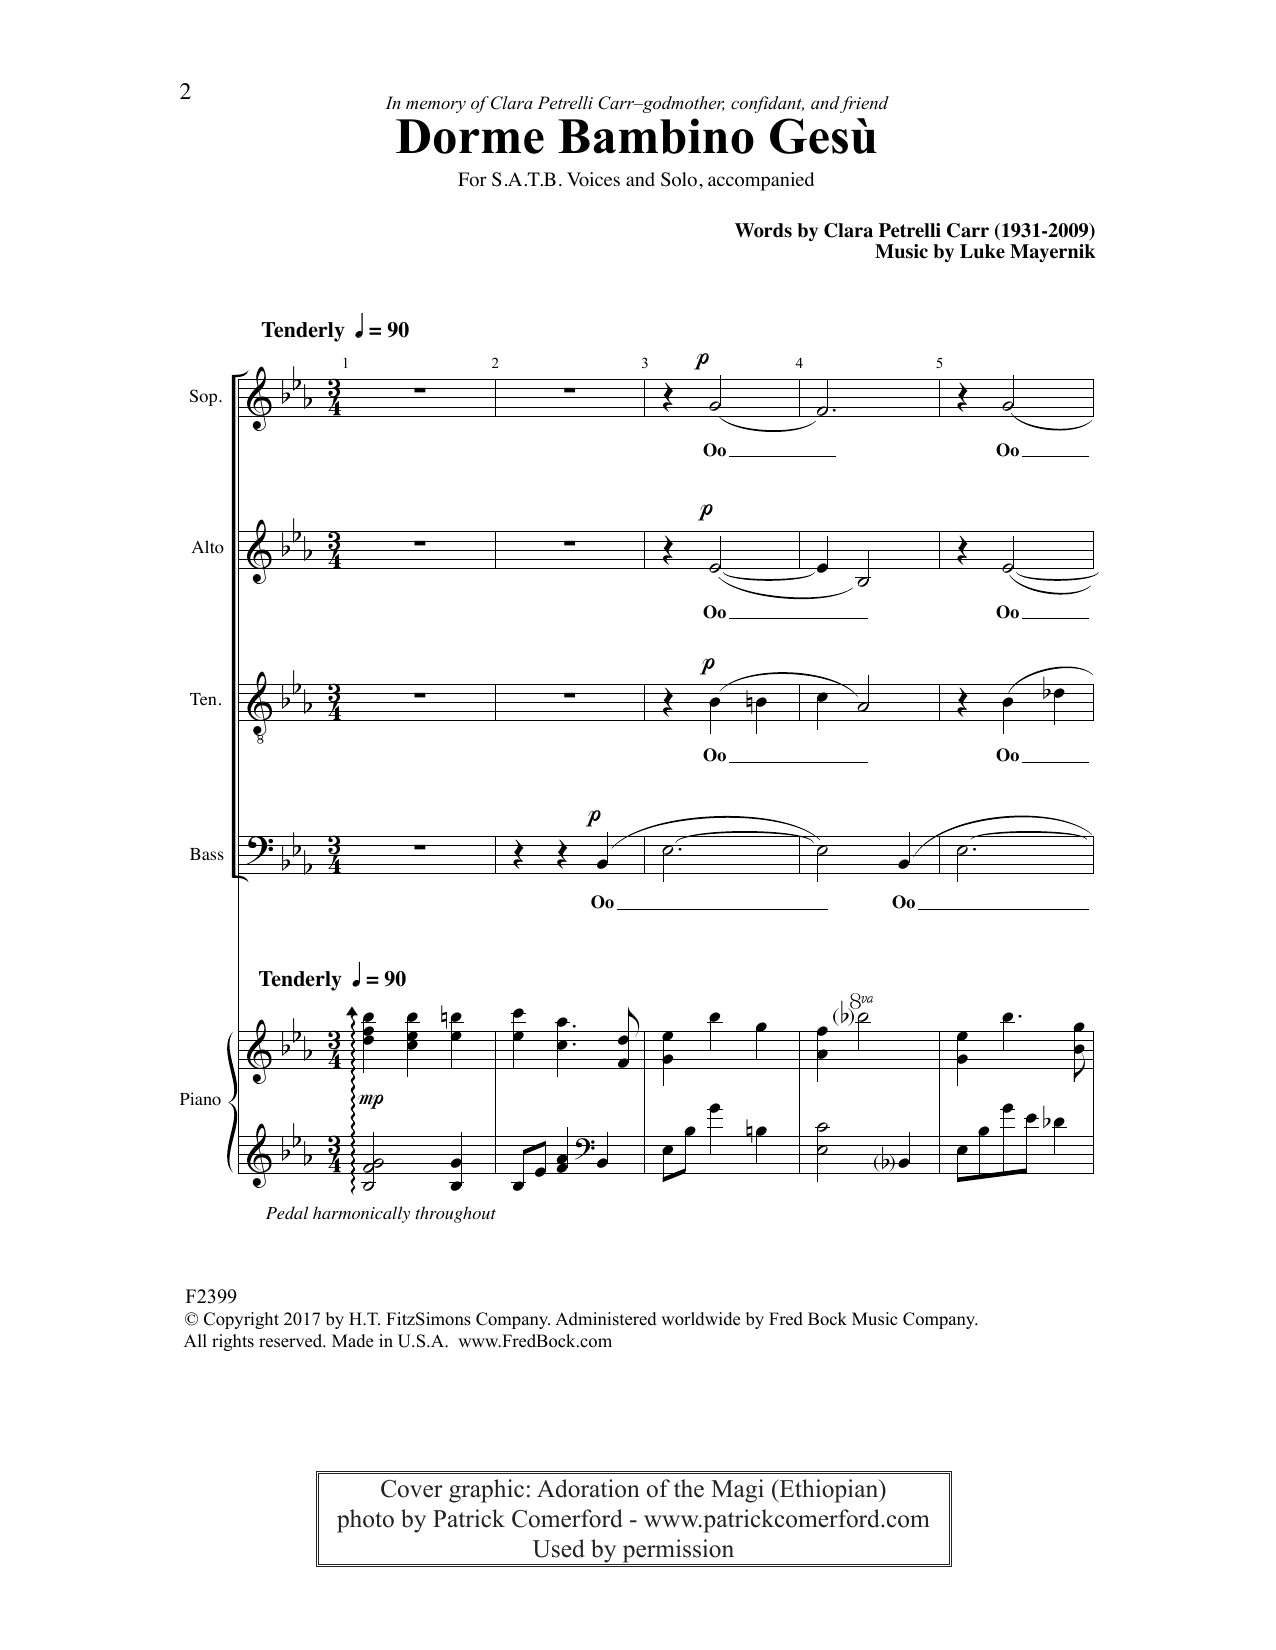 Clara Petrelli Carr Dorme Bambino Gesu Sheet Music Notes & Chords for Choral - Download or Print PDF